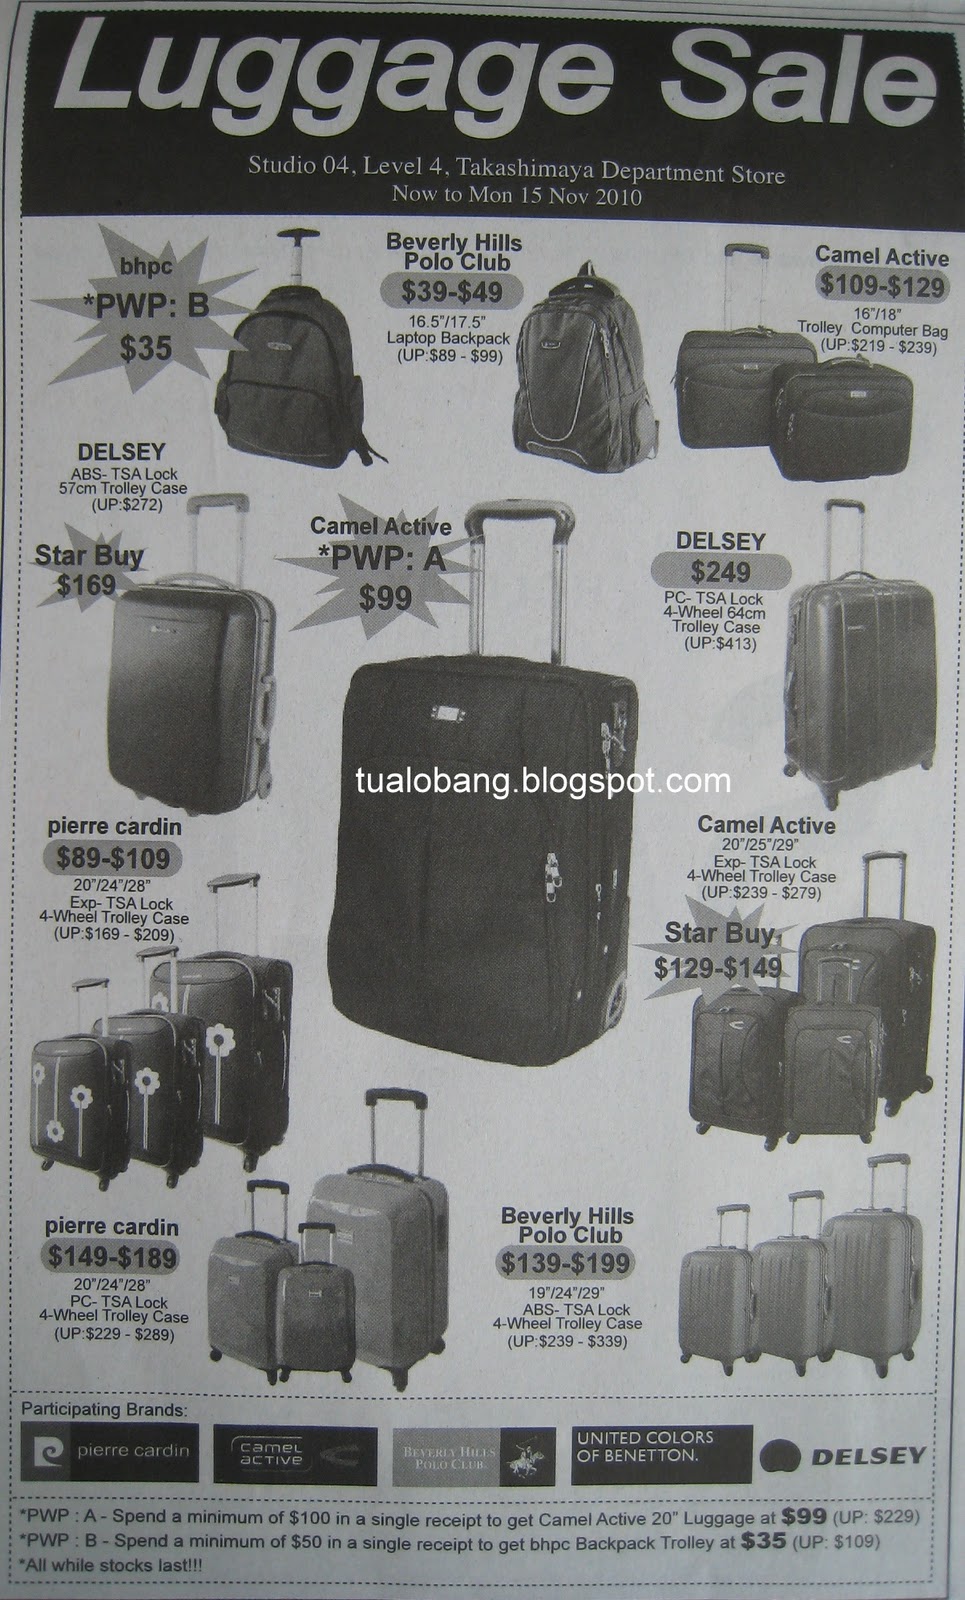 Tua Lobang: Luggage Sale@Takashimaya Level 4, Till 15 Nov 2010